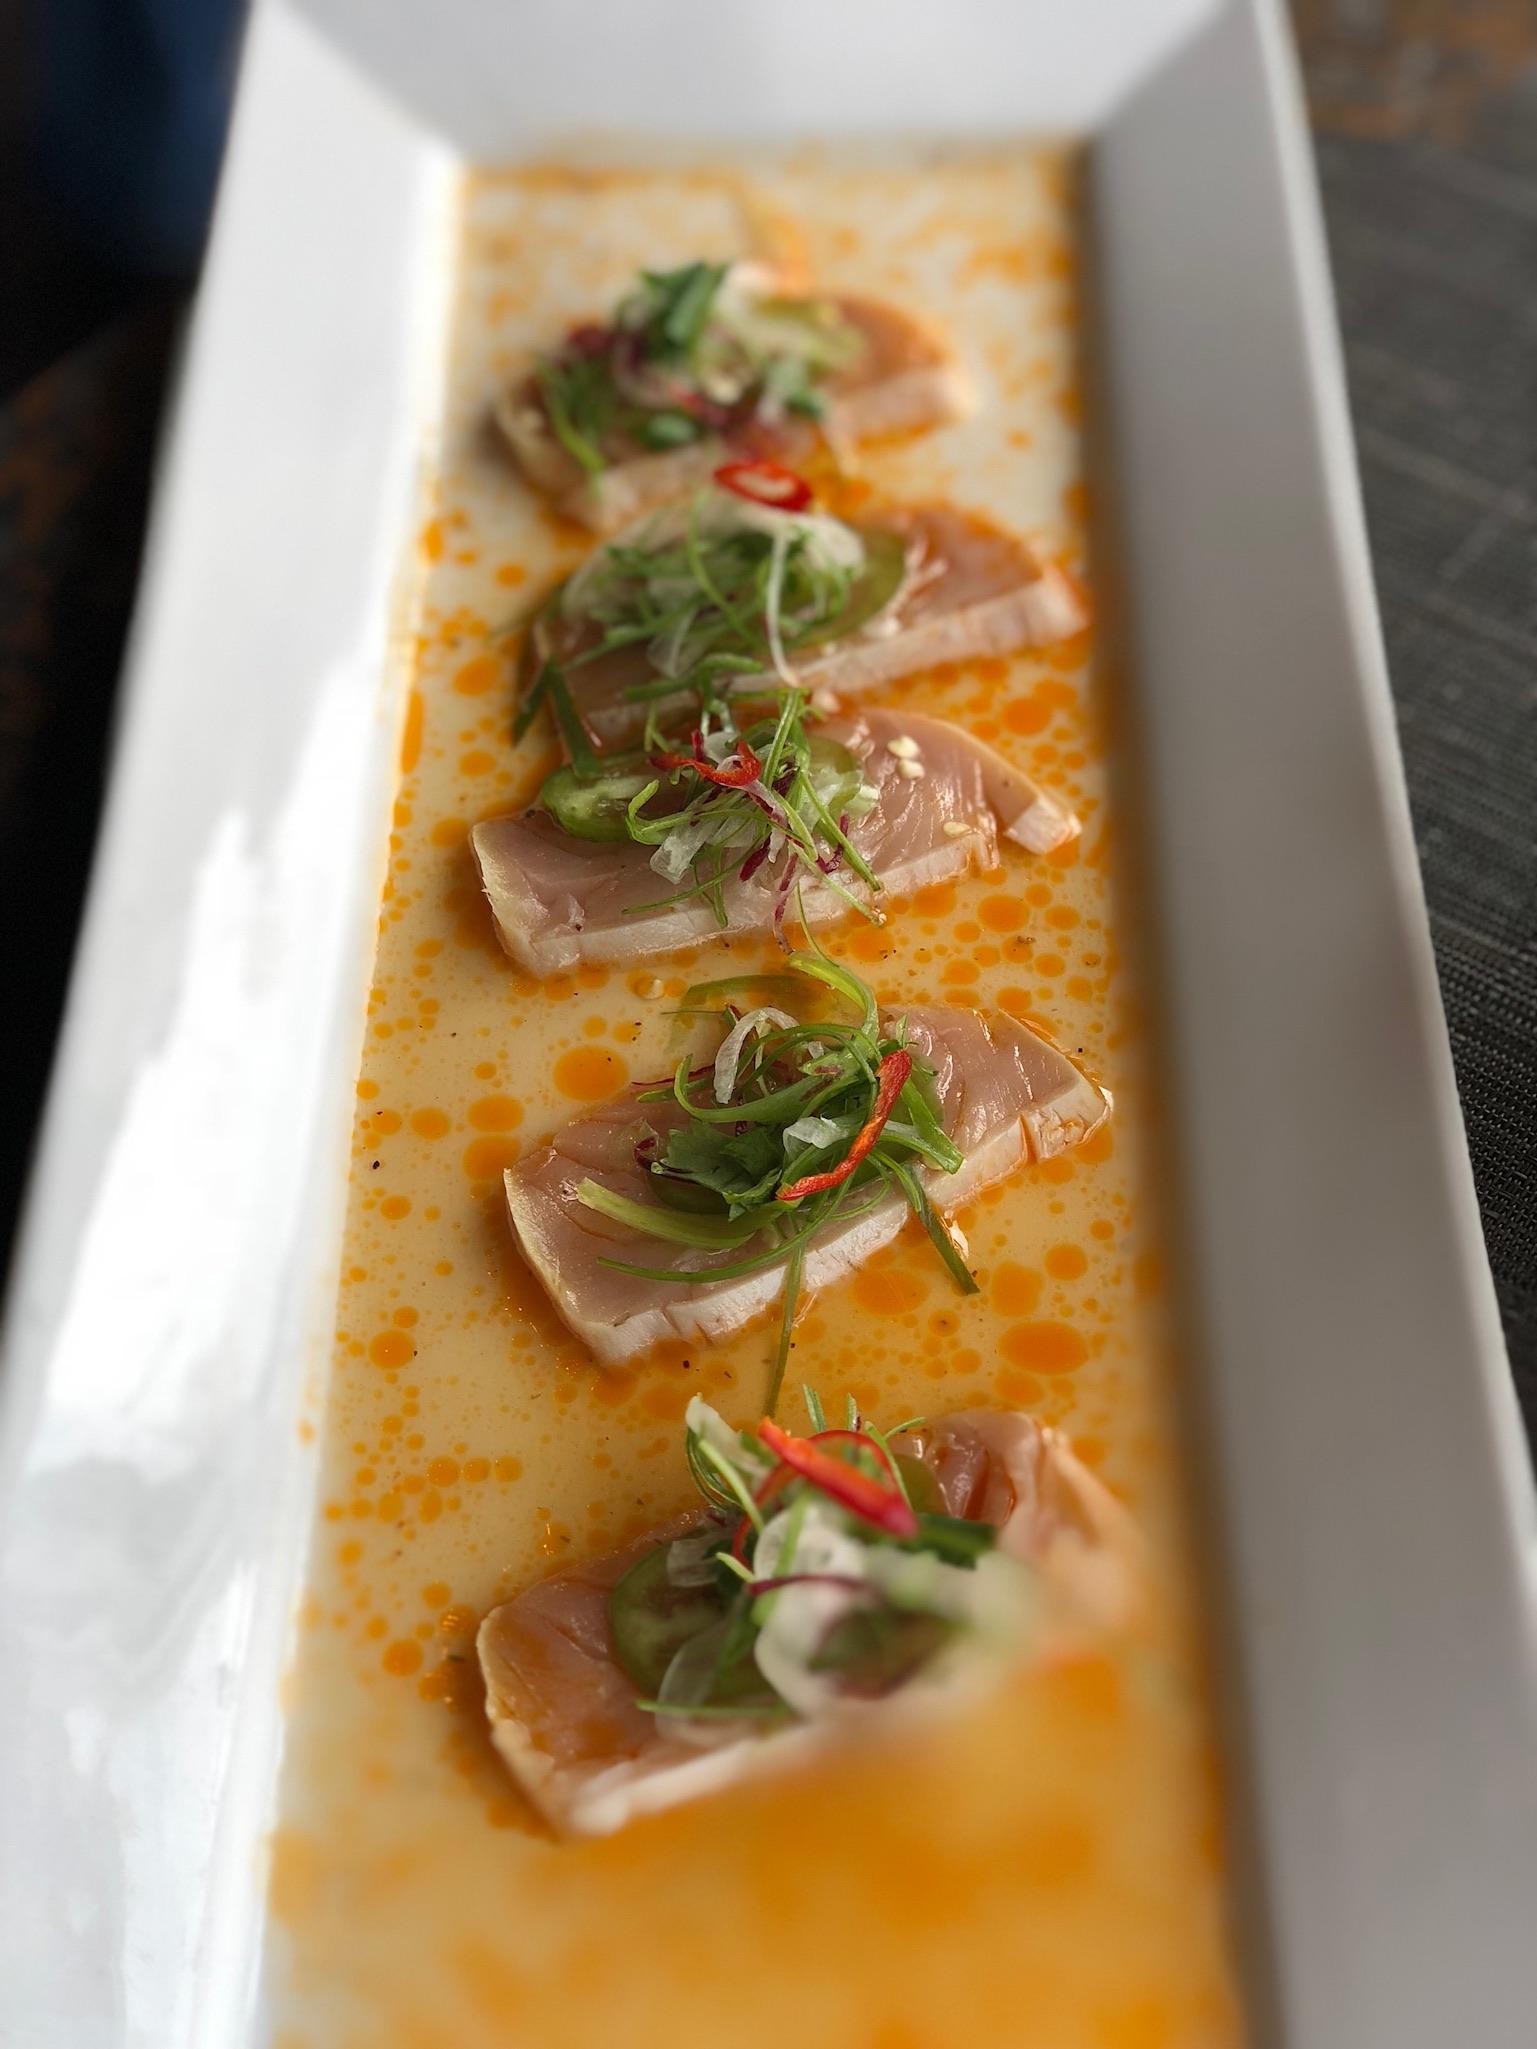 chili albacore sashimi